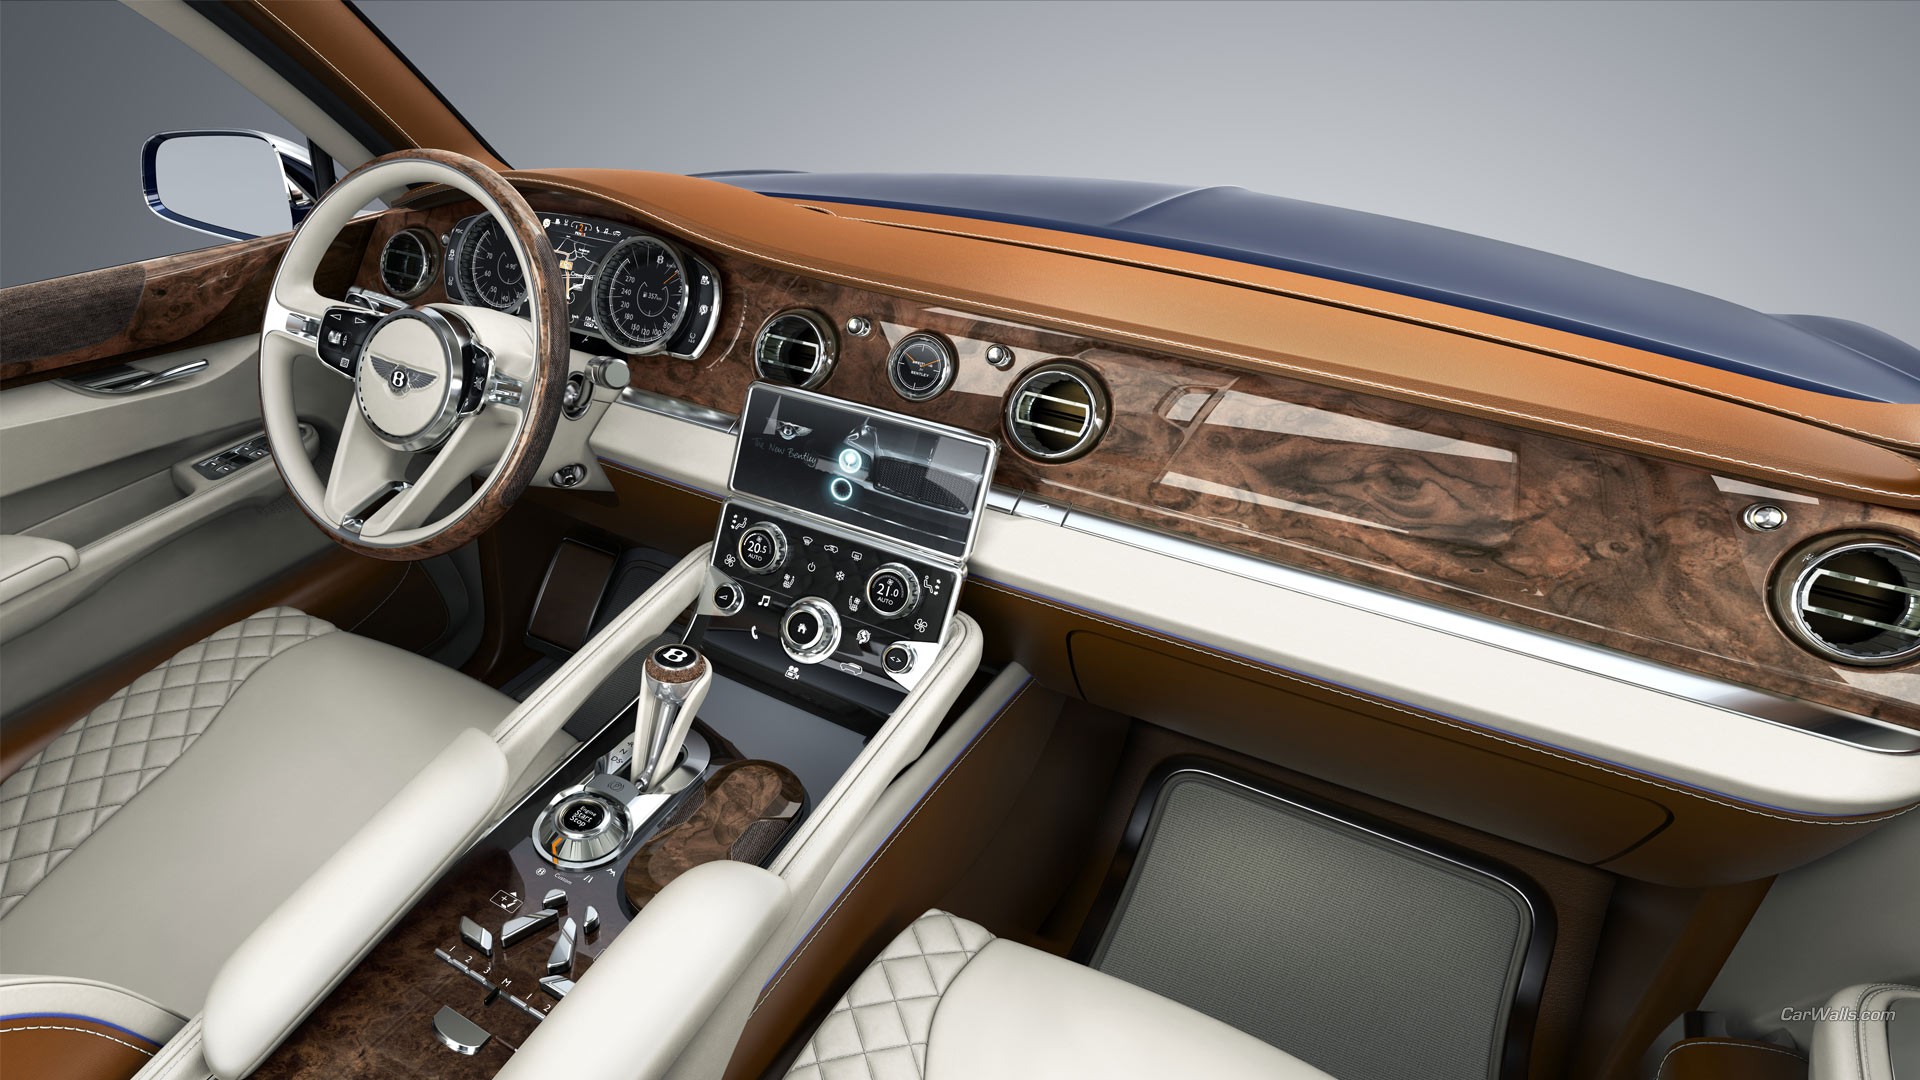 General 1920x1080 Bentley XP9 car luxury cars car interior Bentley vehicle British cars